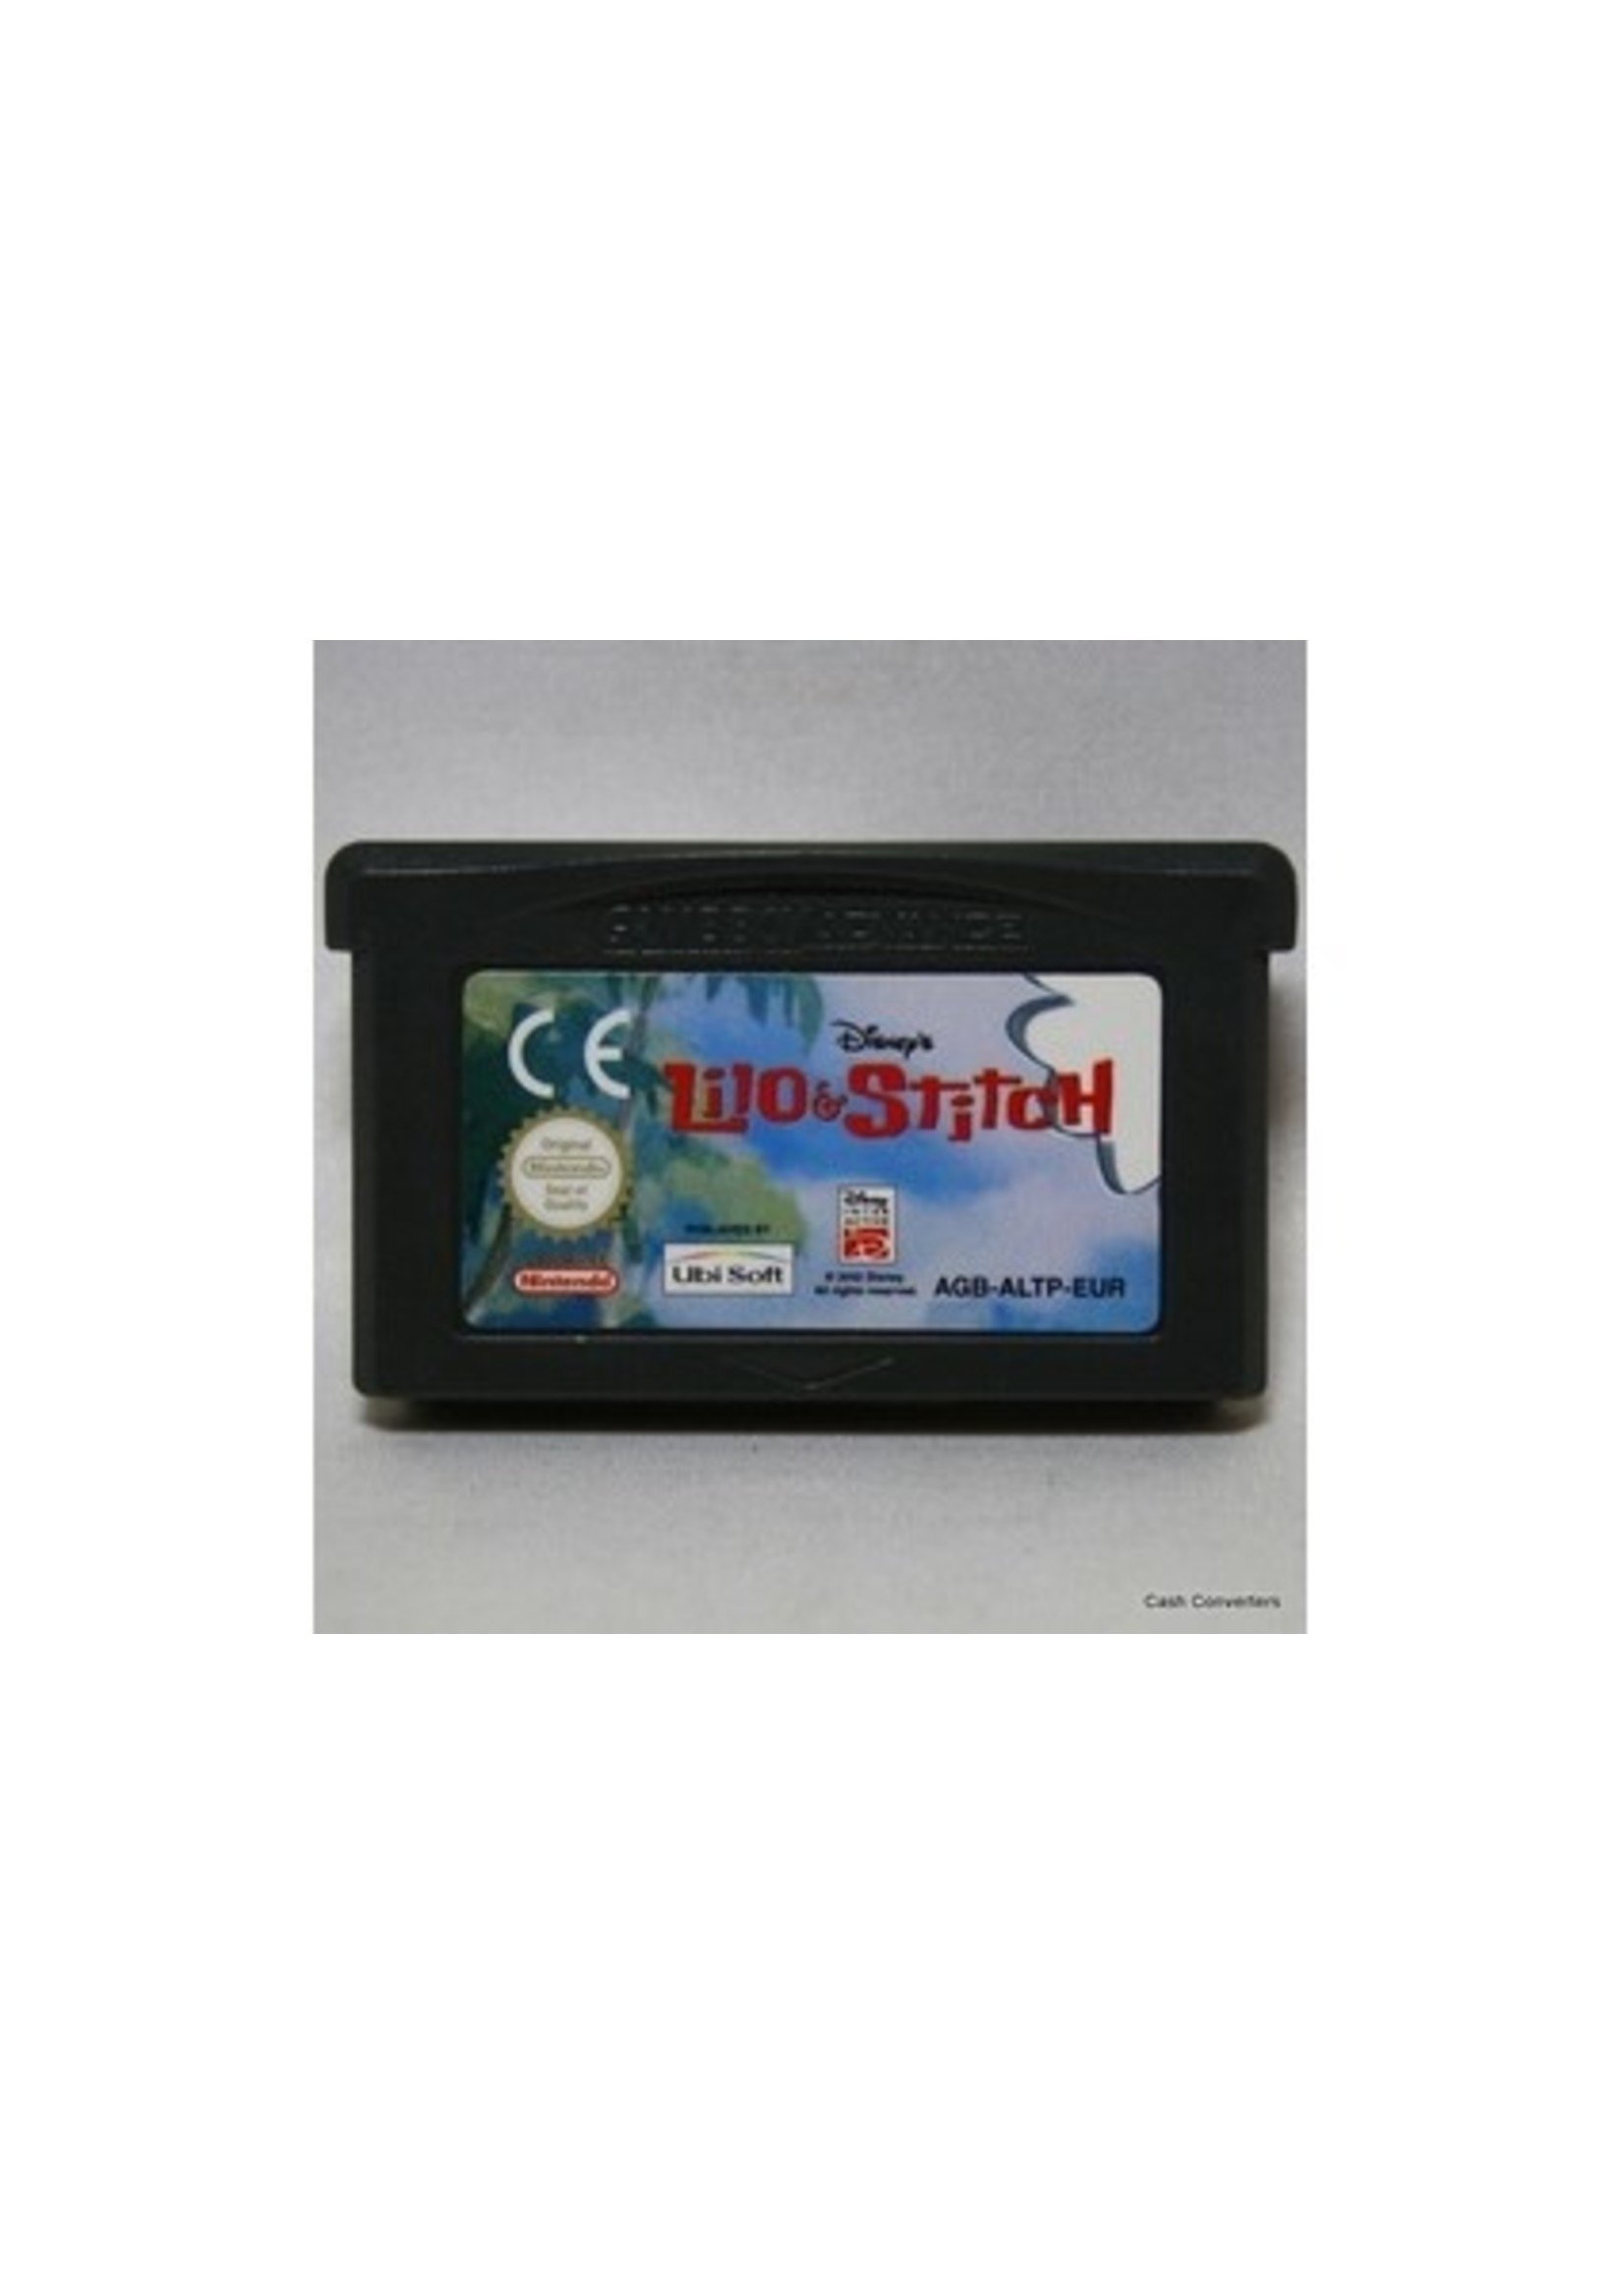 Nintendo Gameboy Advance Lilo and Stitch